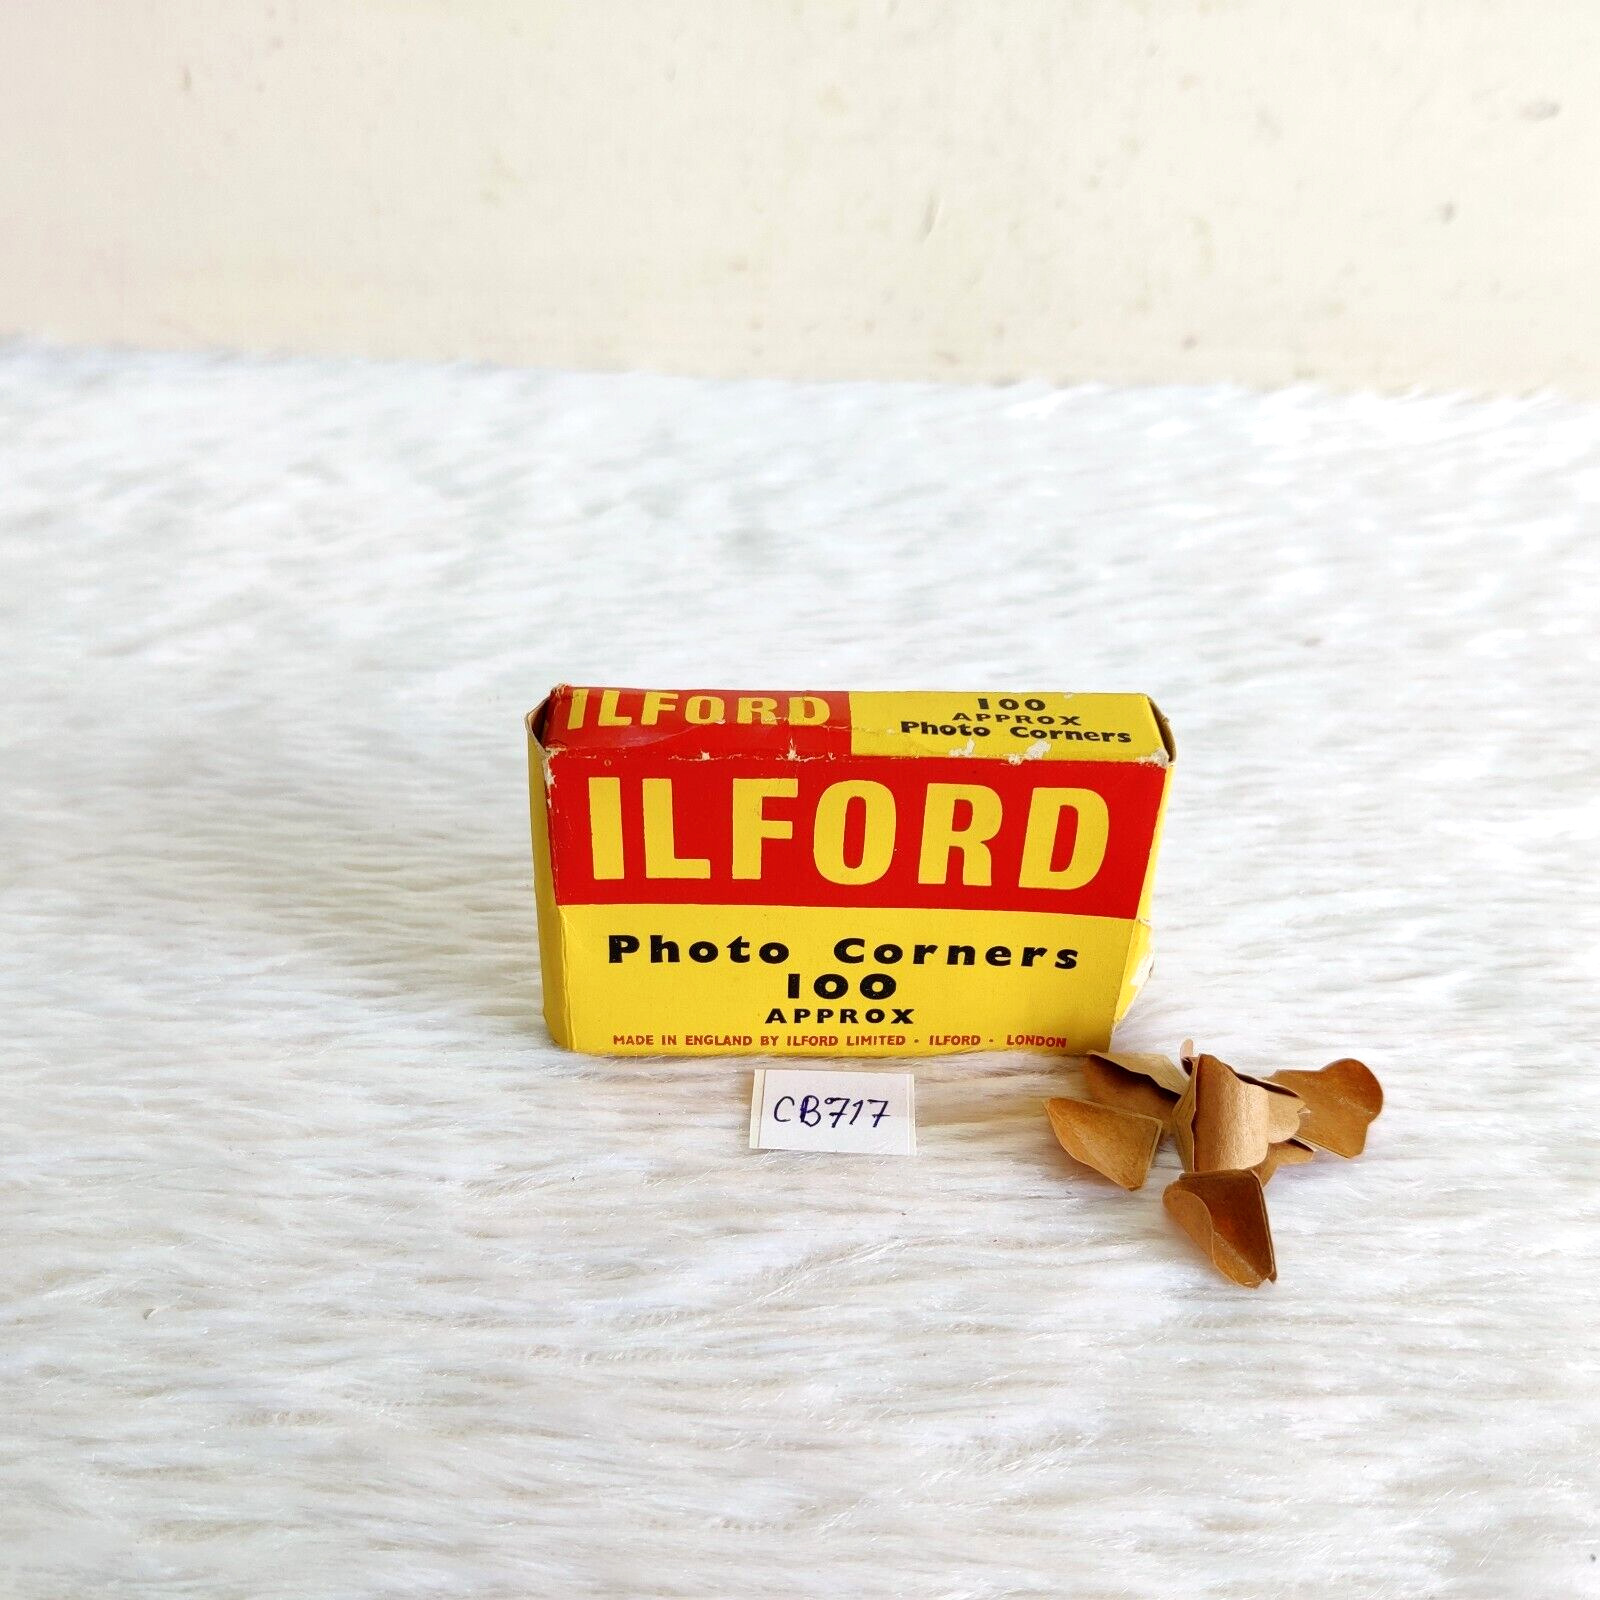 1940 Vintage ILFORD Photo Corners Advertising Cardboard Box Unused England CB717